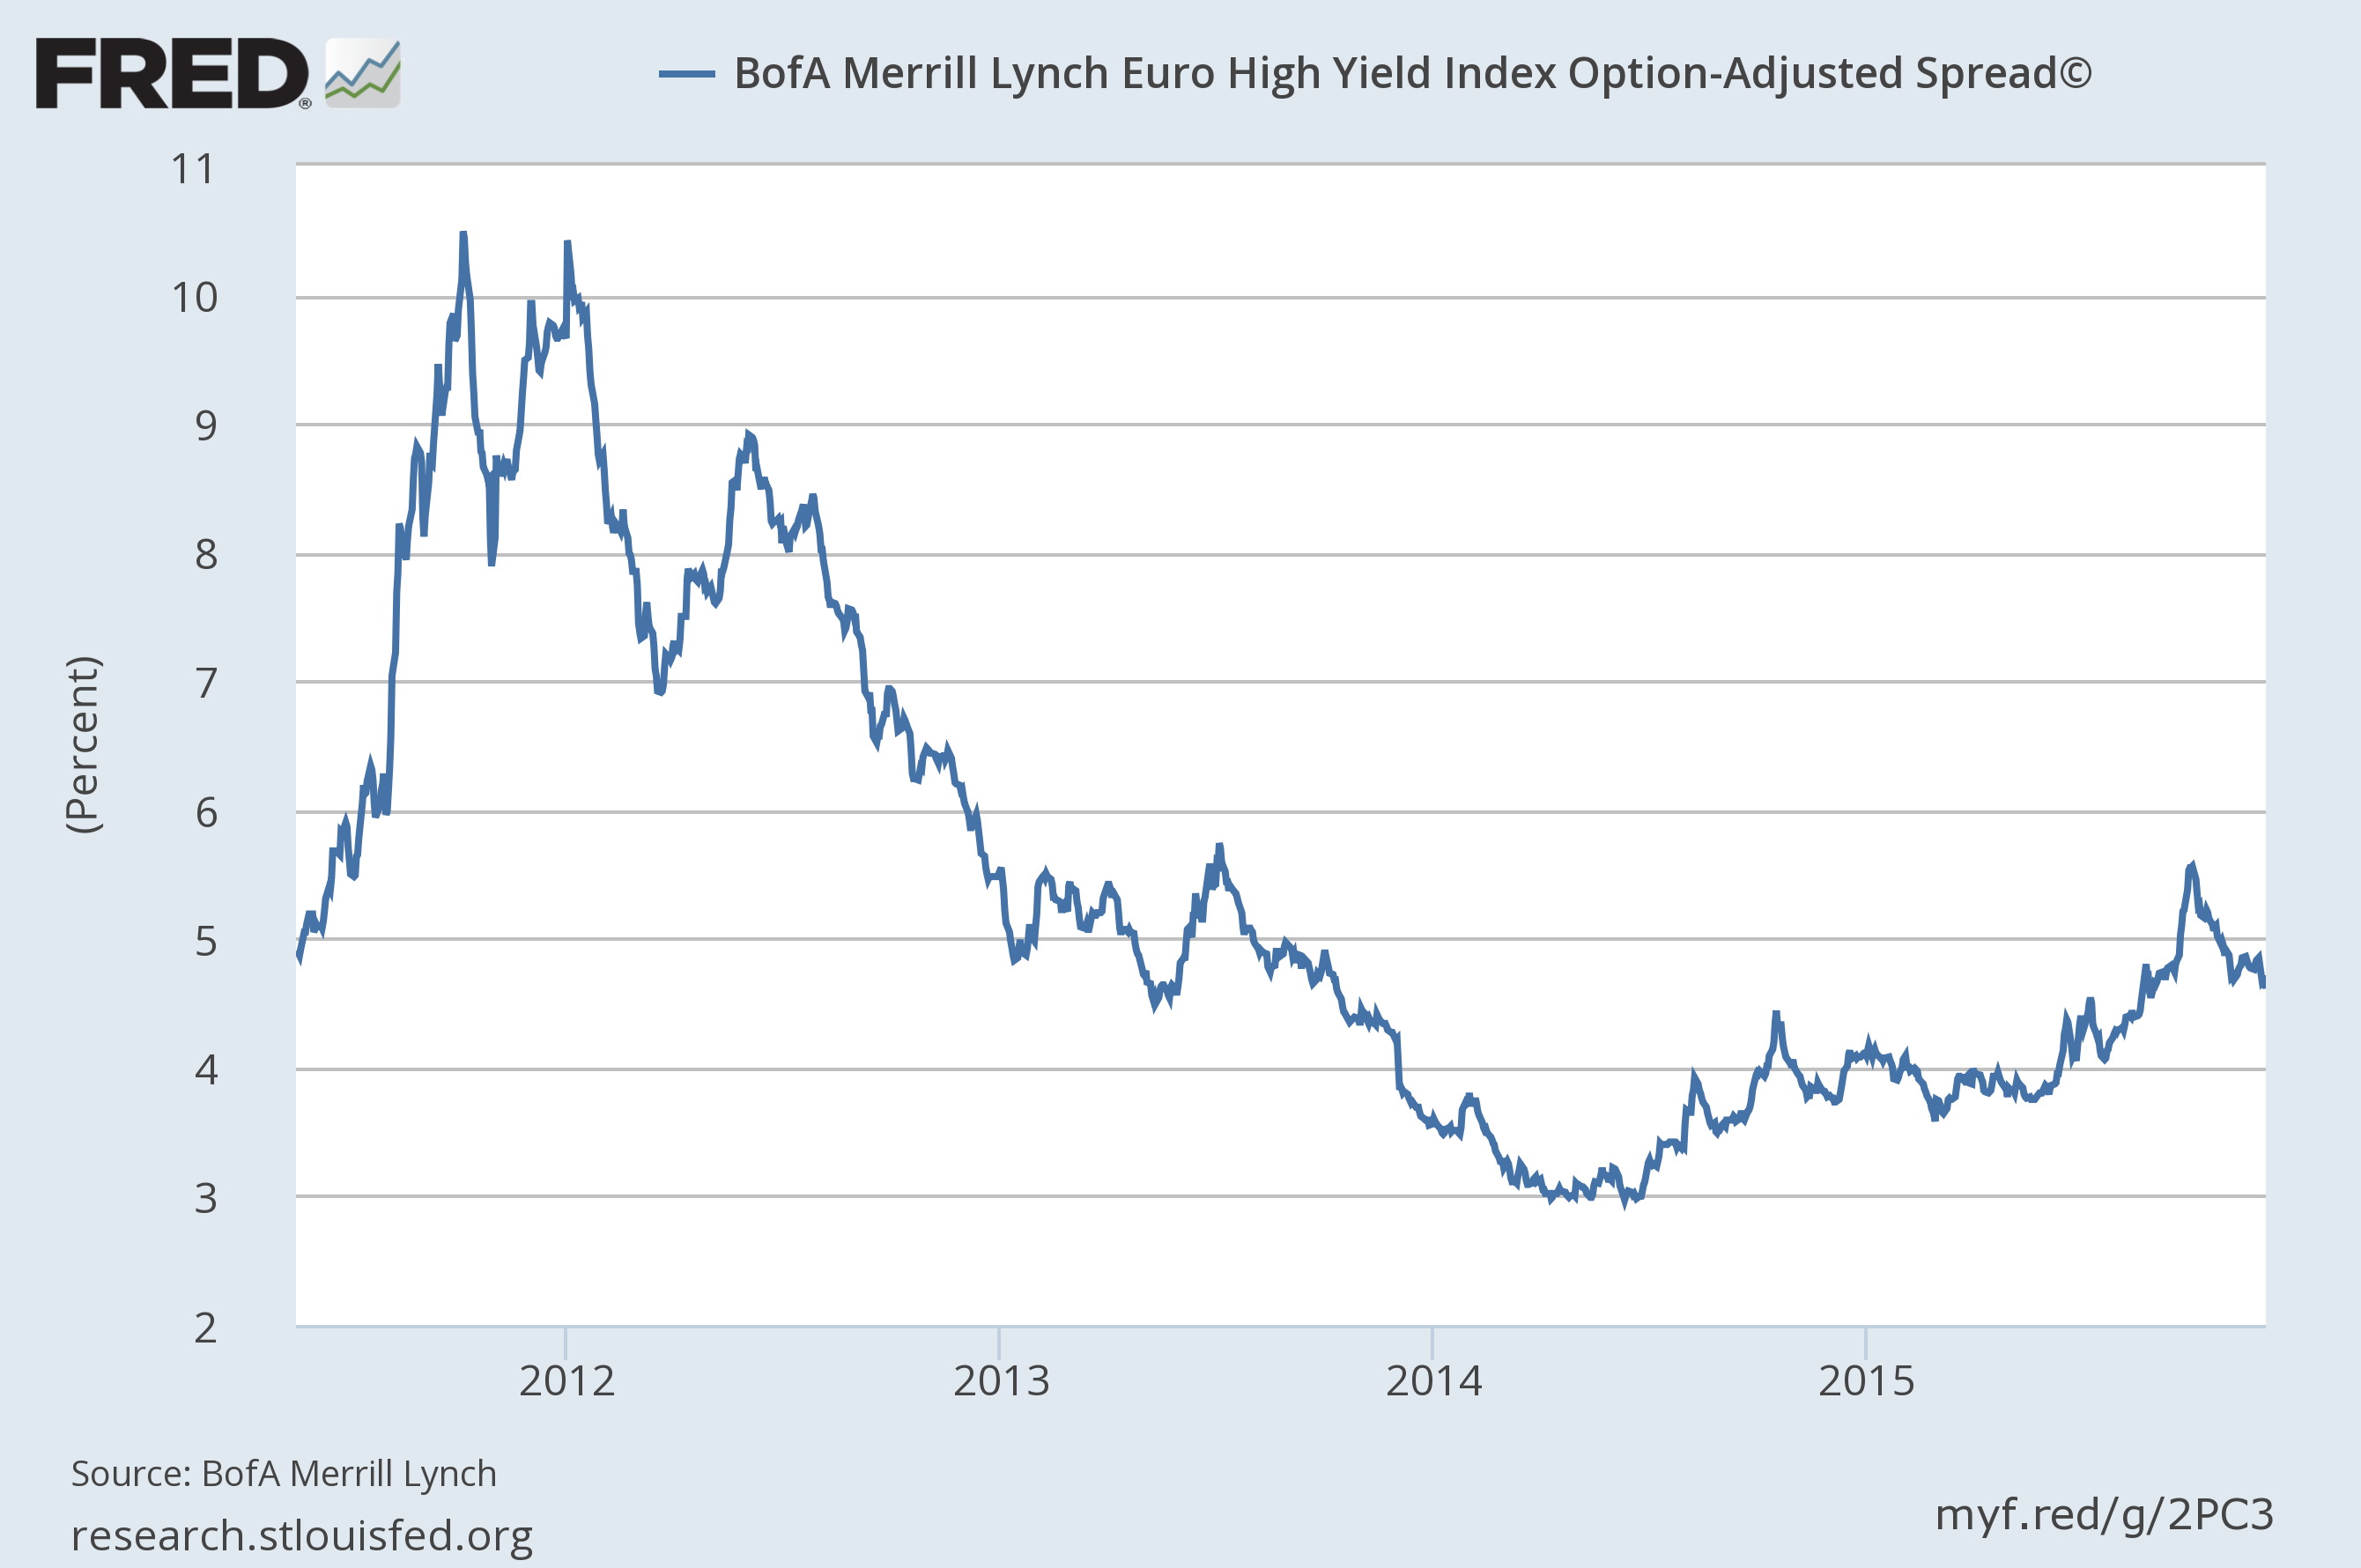 Euro High Yield Index